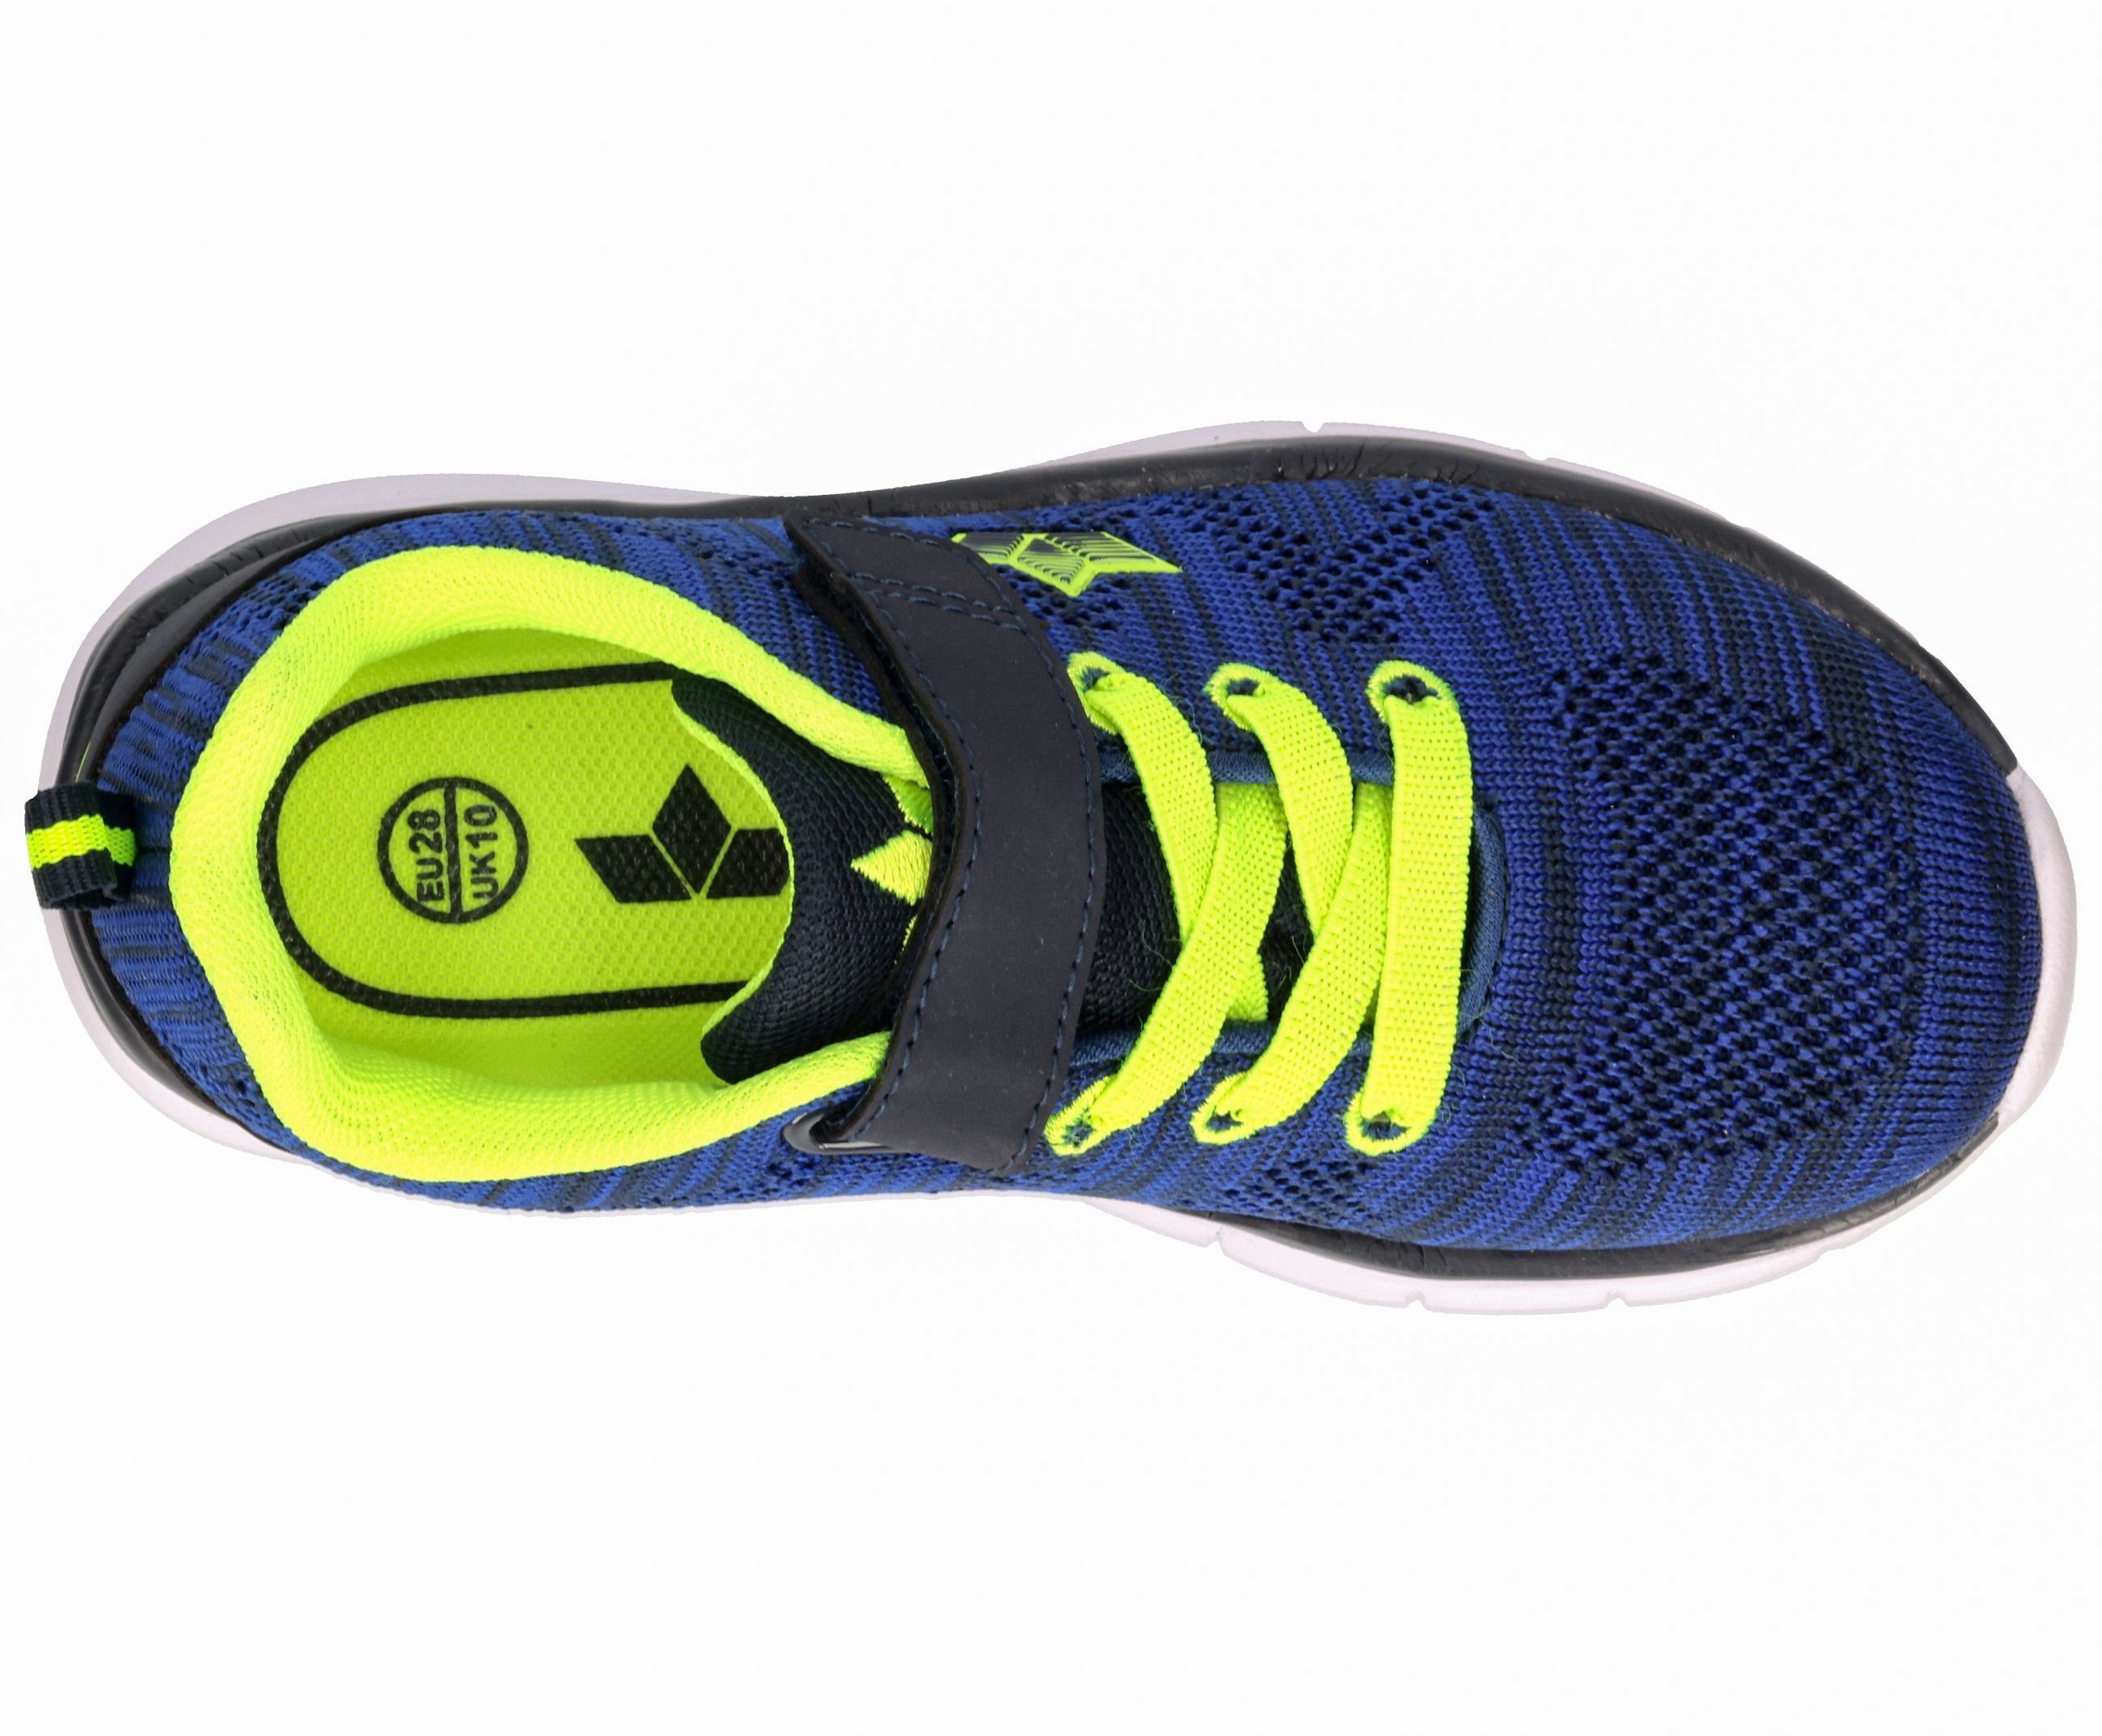 Lico Freizeitschuh Colour Sneaker VS blau/marine/lemon